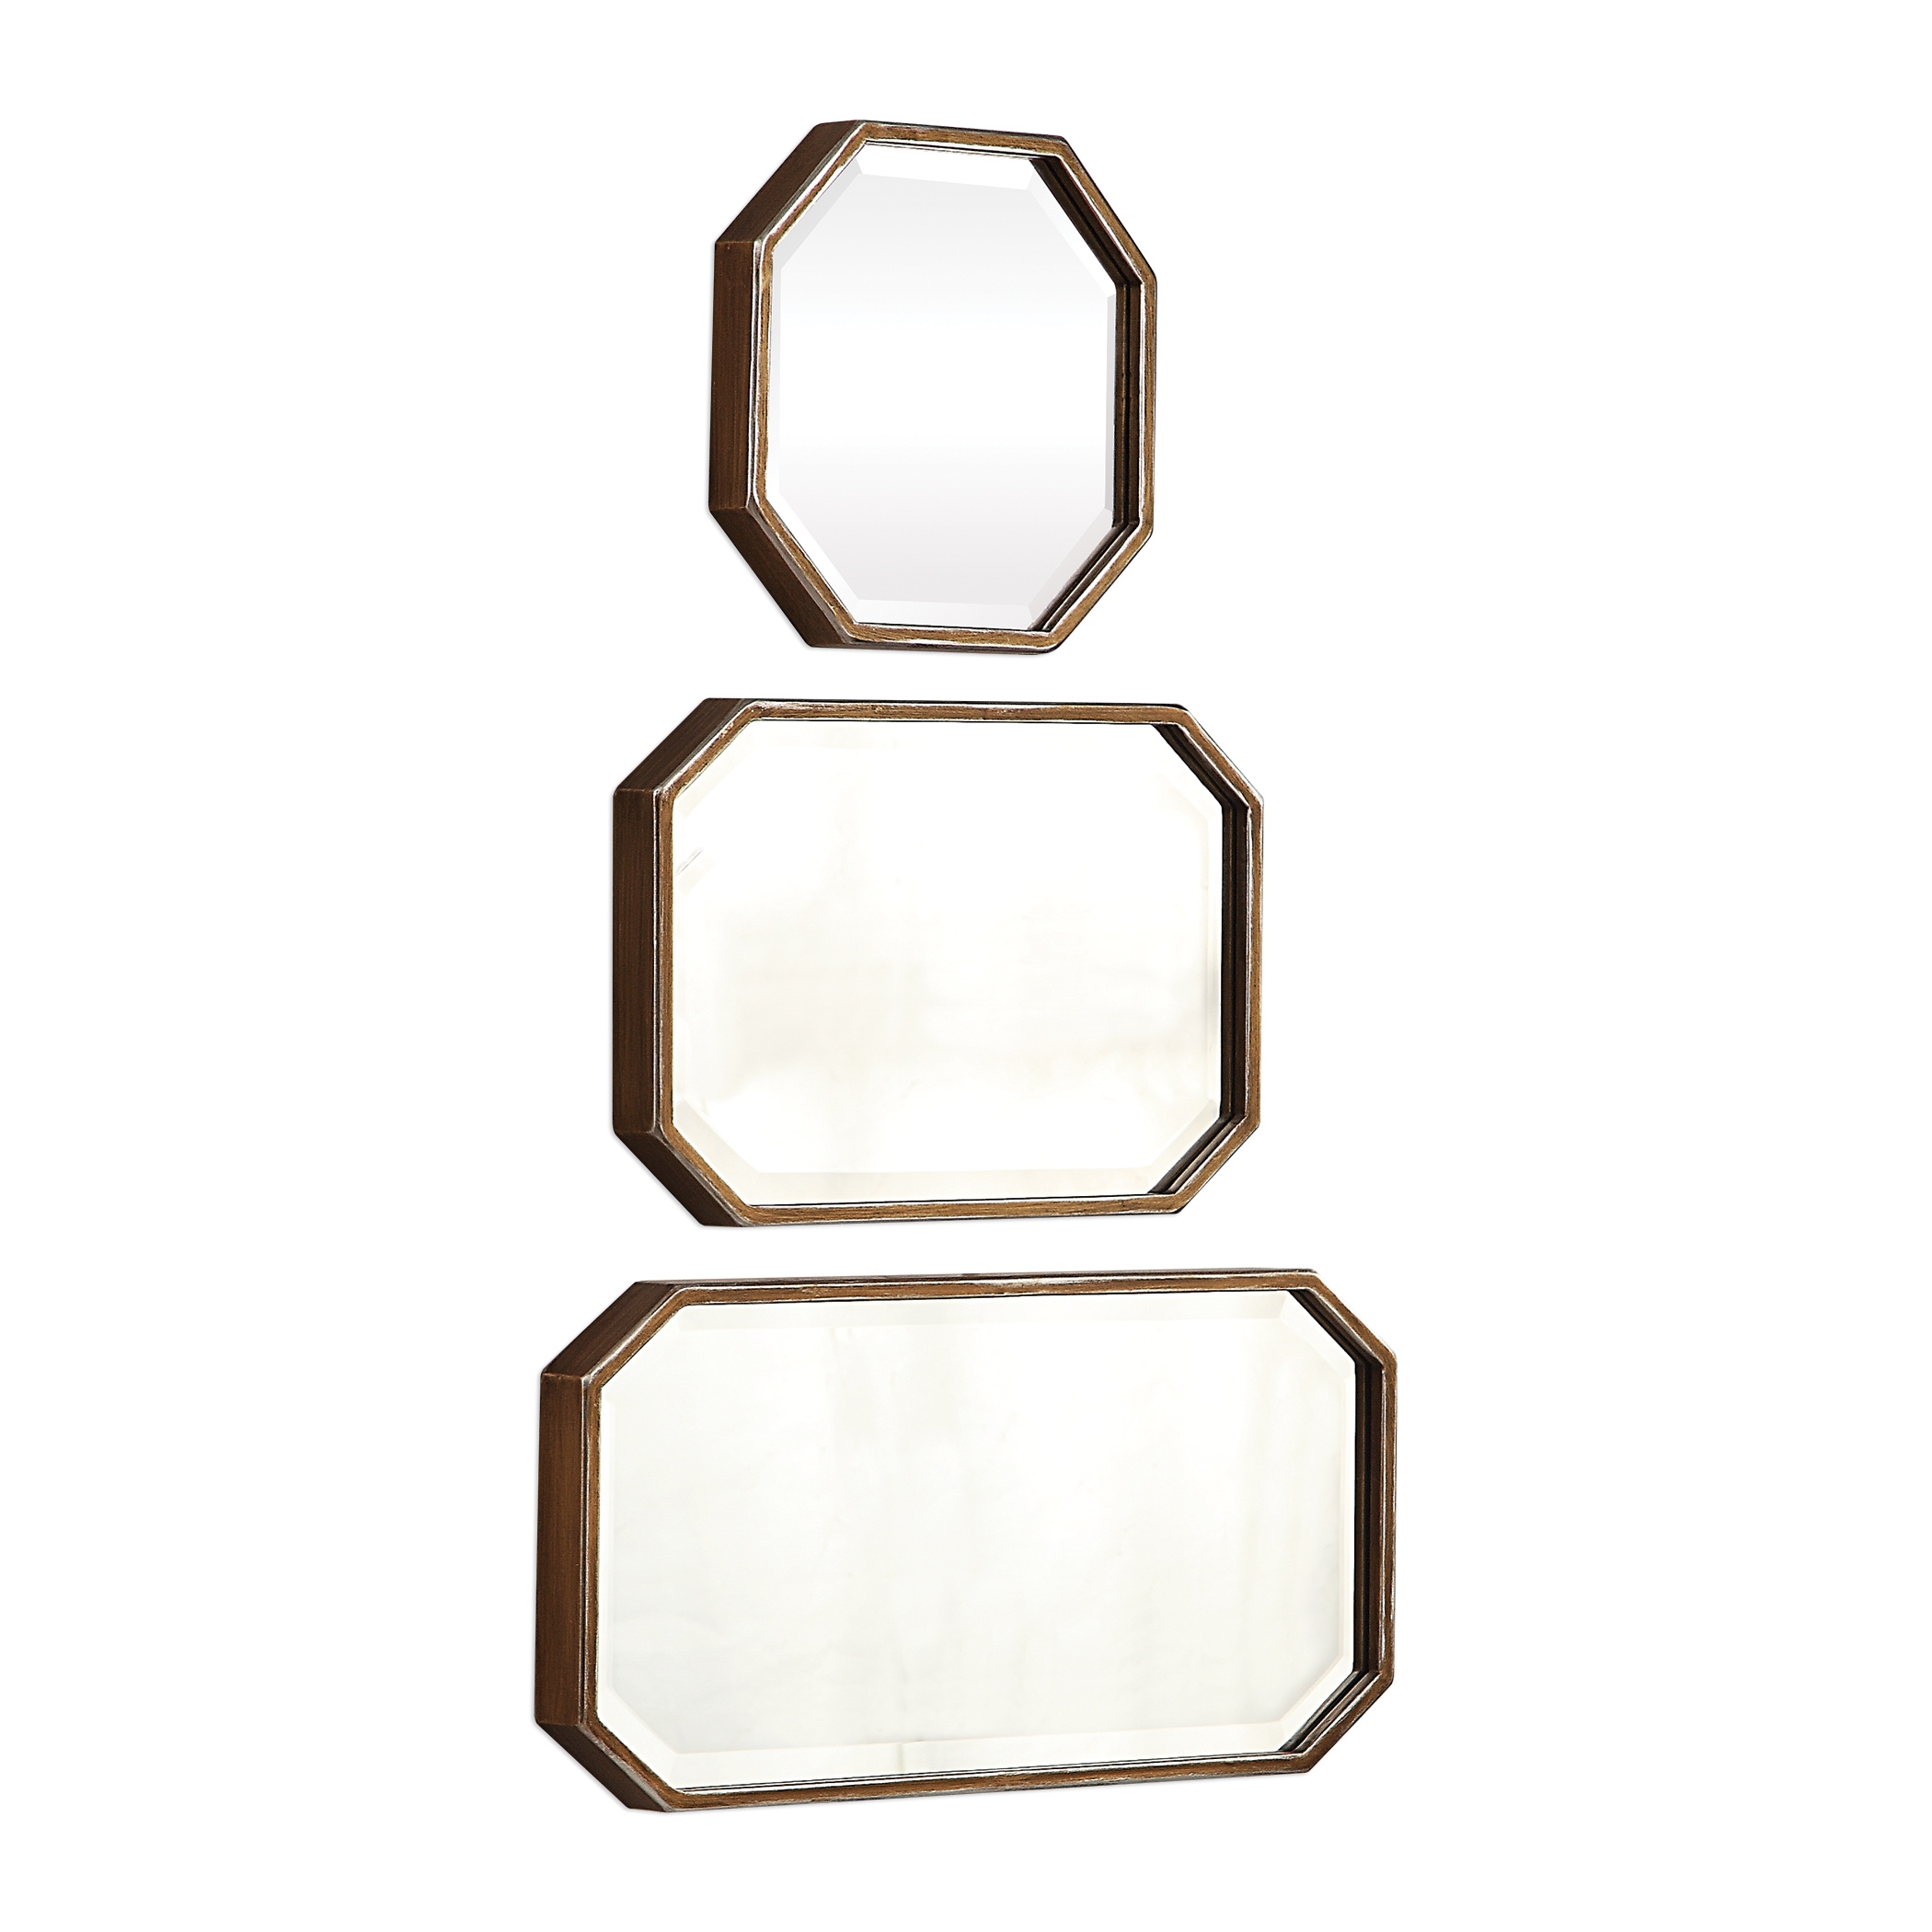 Trois Gold Mirrors, Set of 3 - Image 1